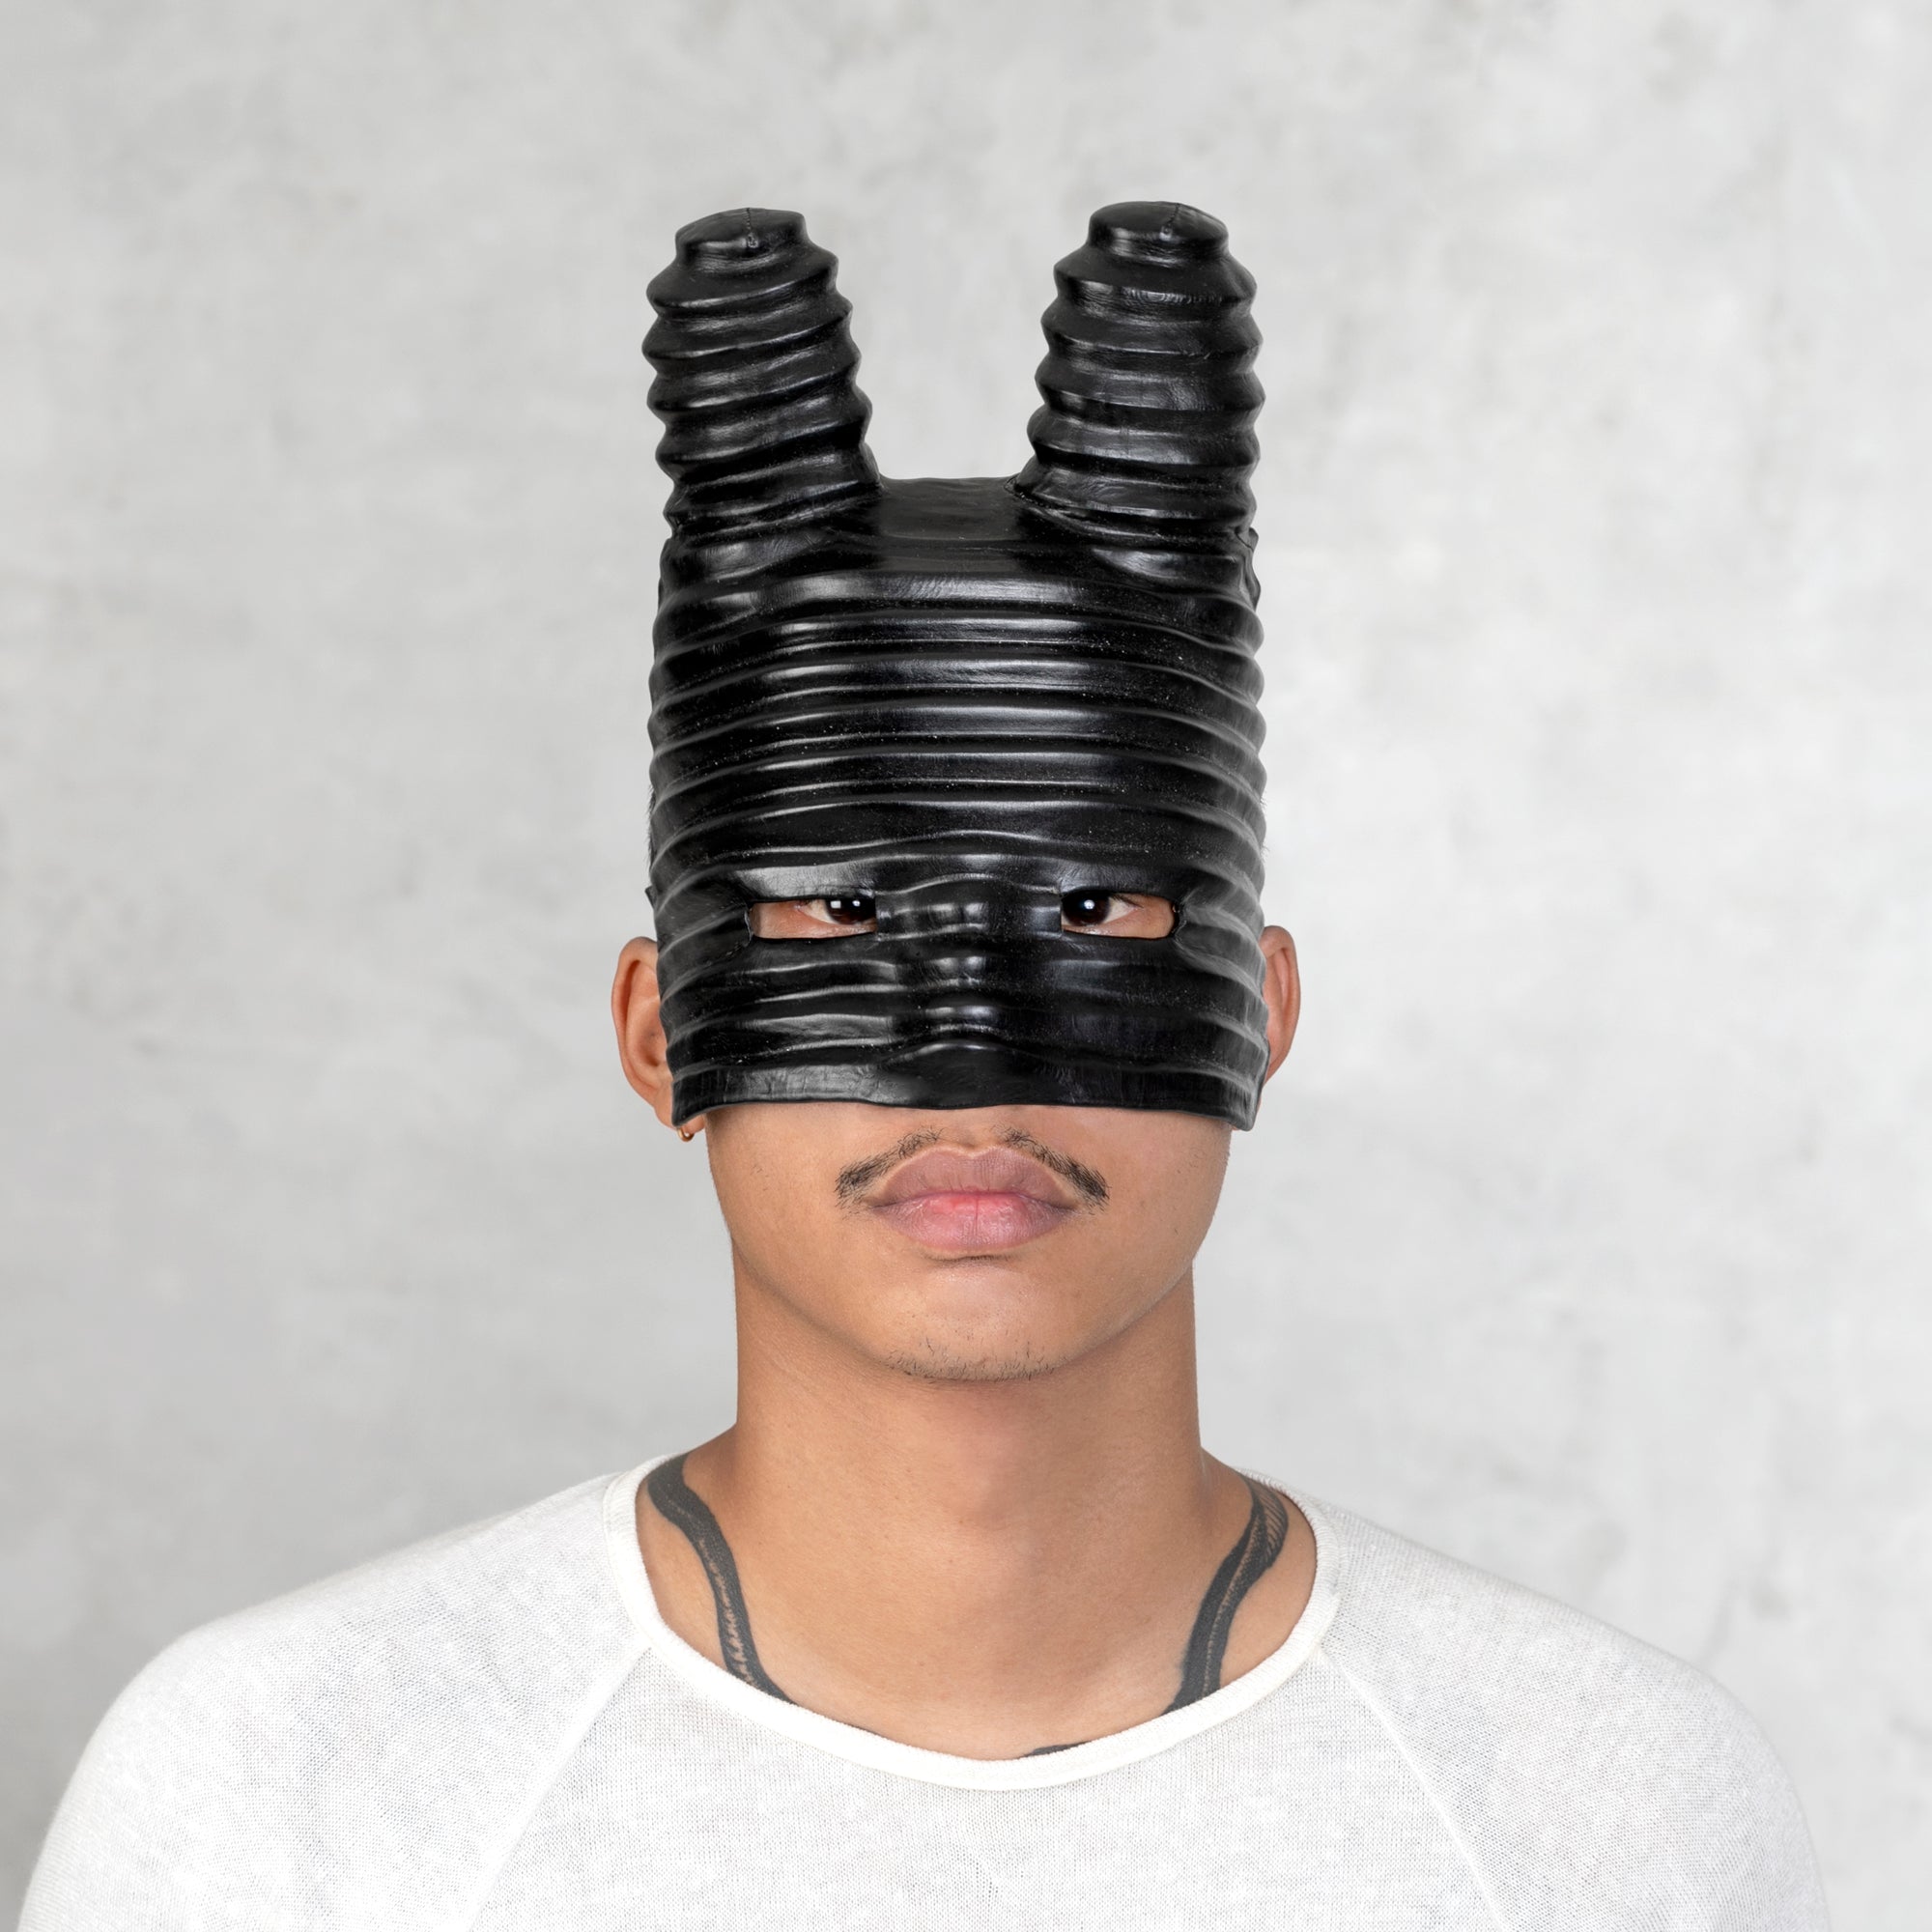 Attitude Studio Yak Skull Full Face Mask Costume Accessory For Adults –  Silver